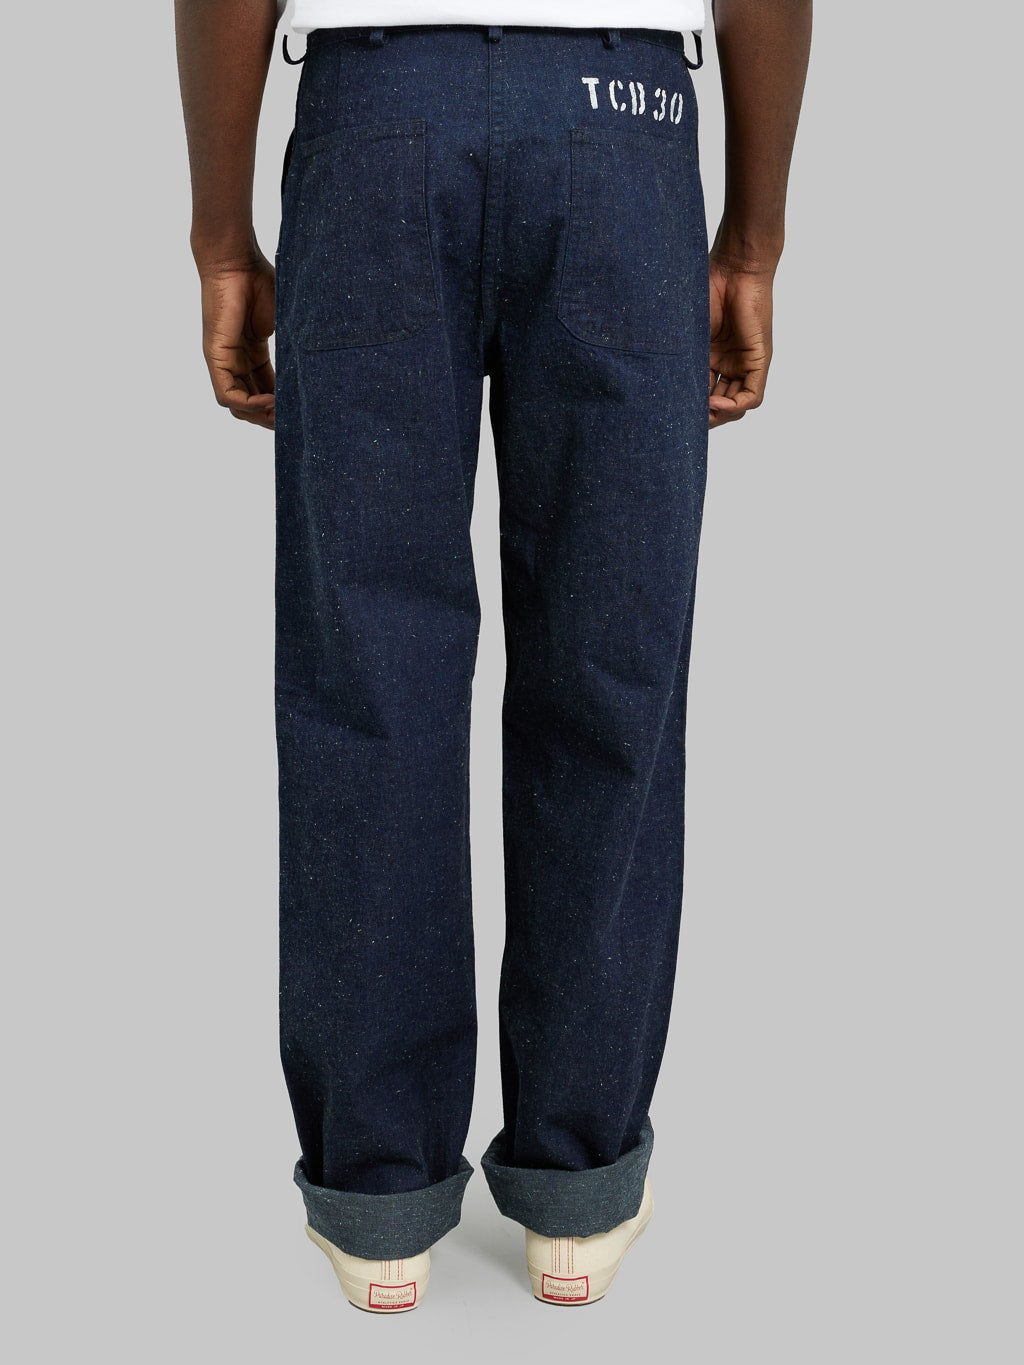 tcb jeans usn seamens denim trousers back fit